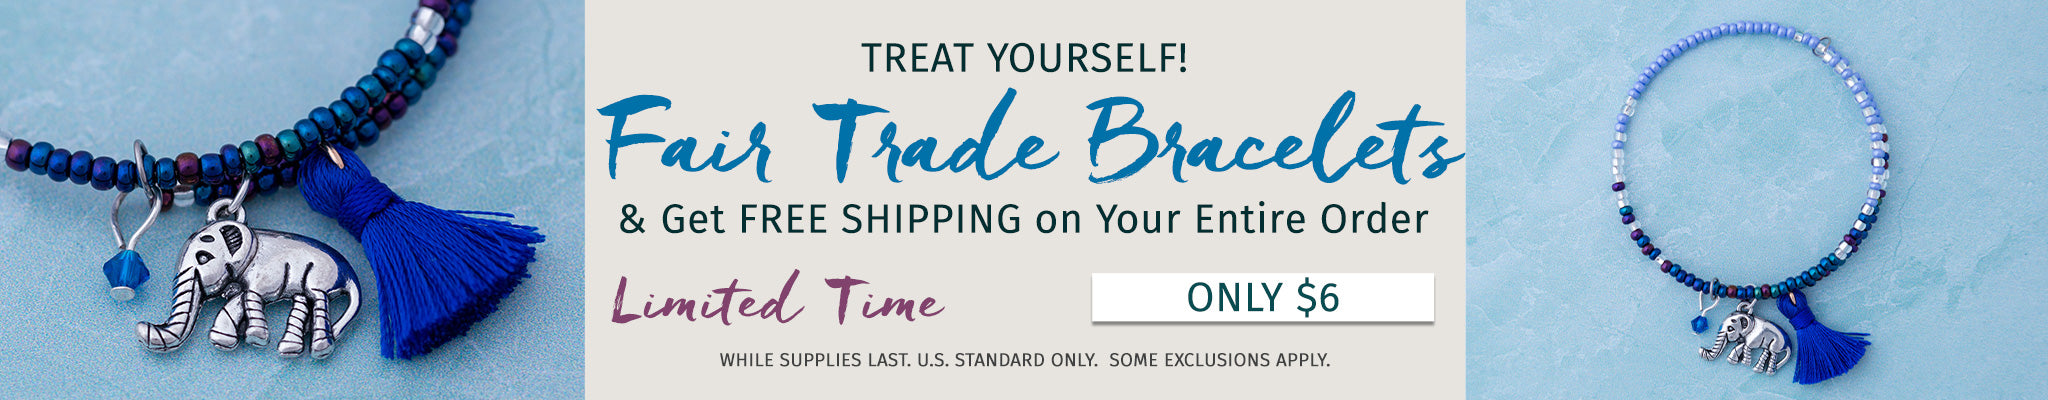 Fair Trade Bracelets! | Only $6 | New!